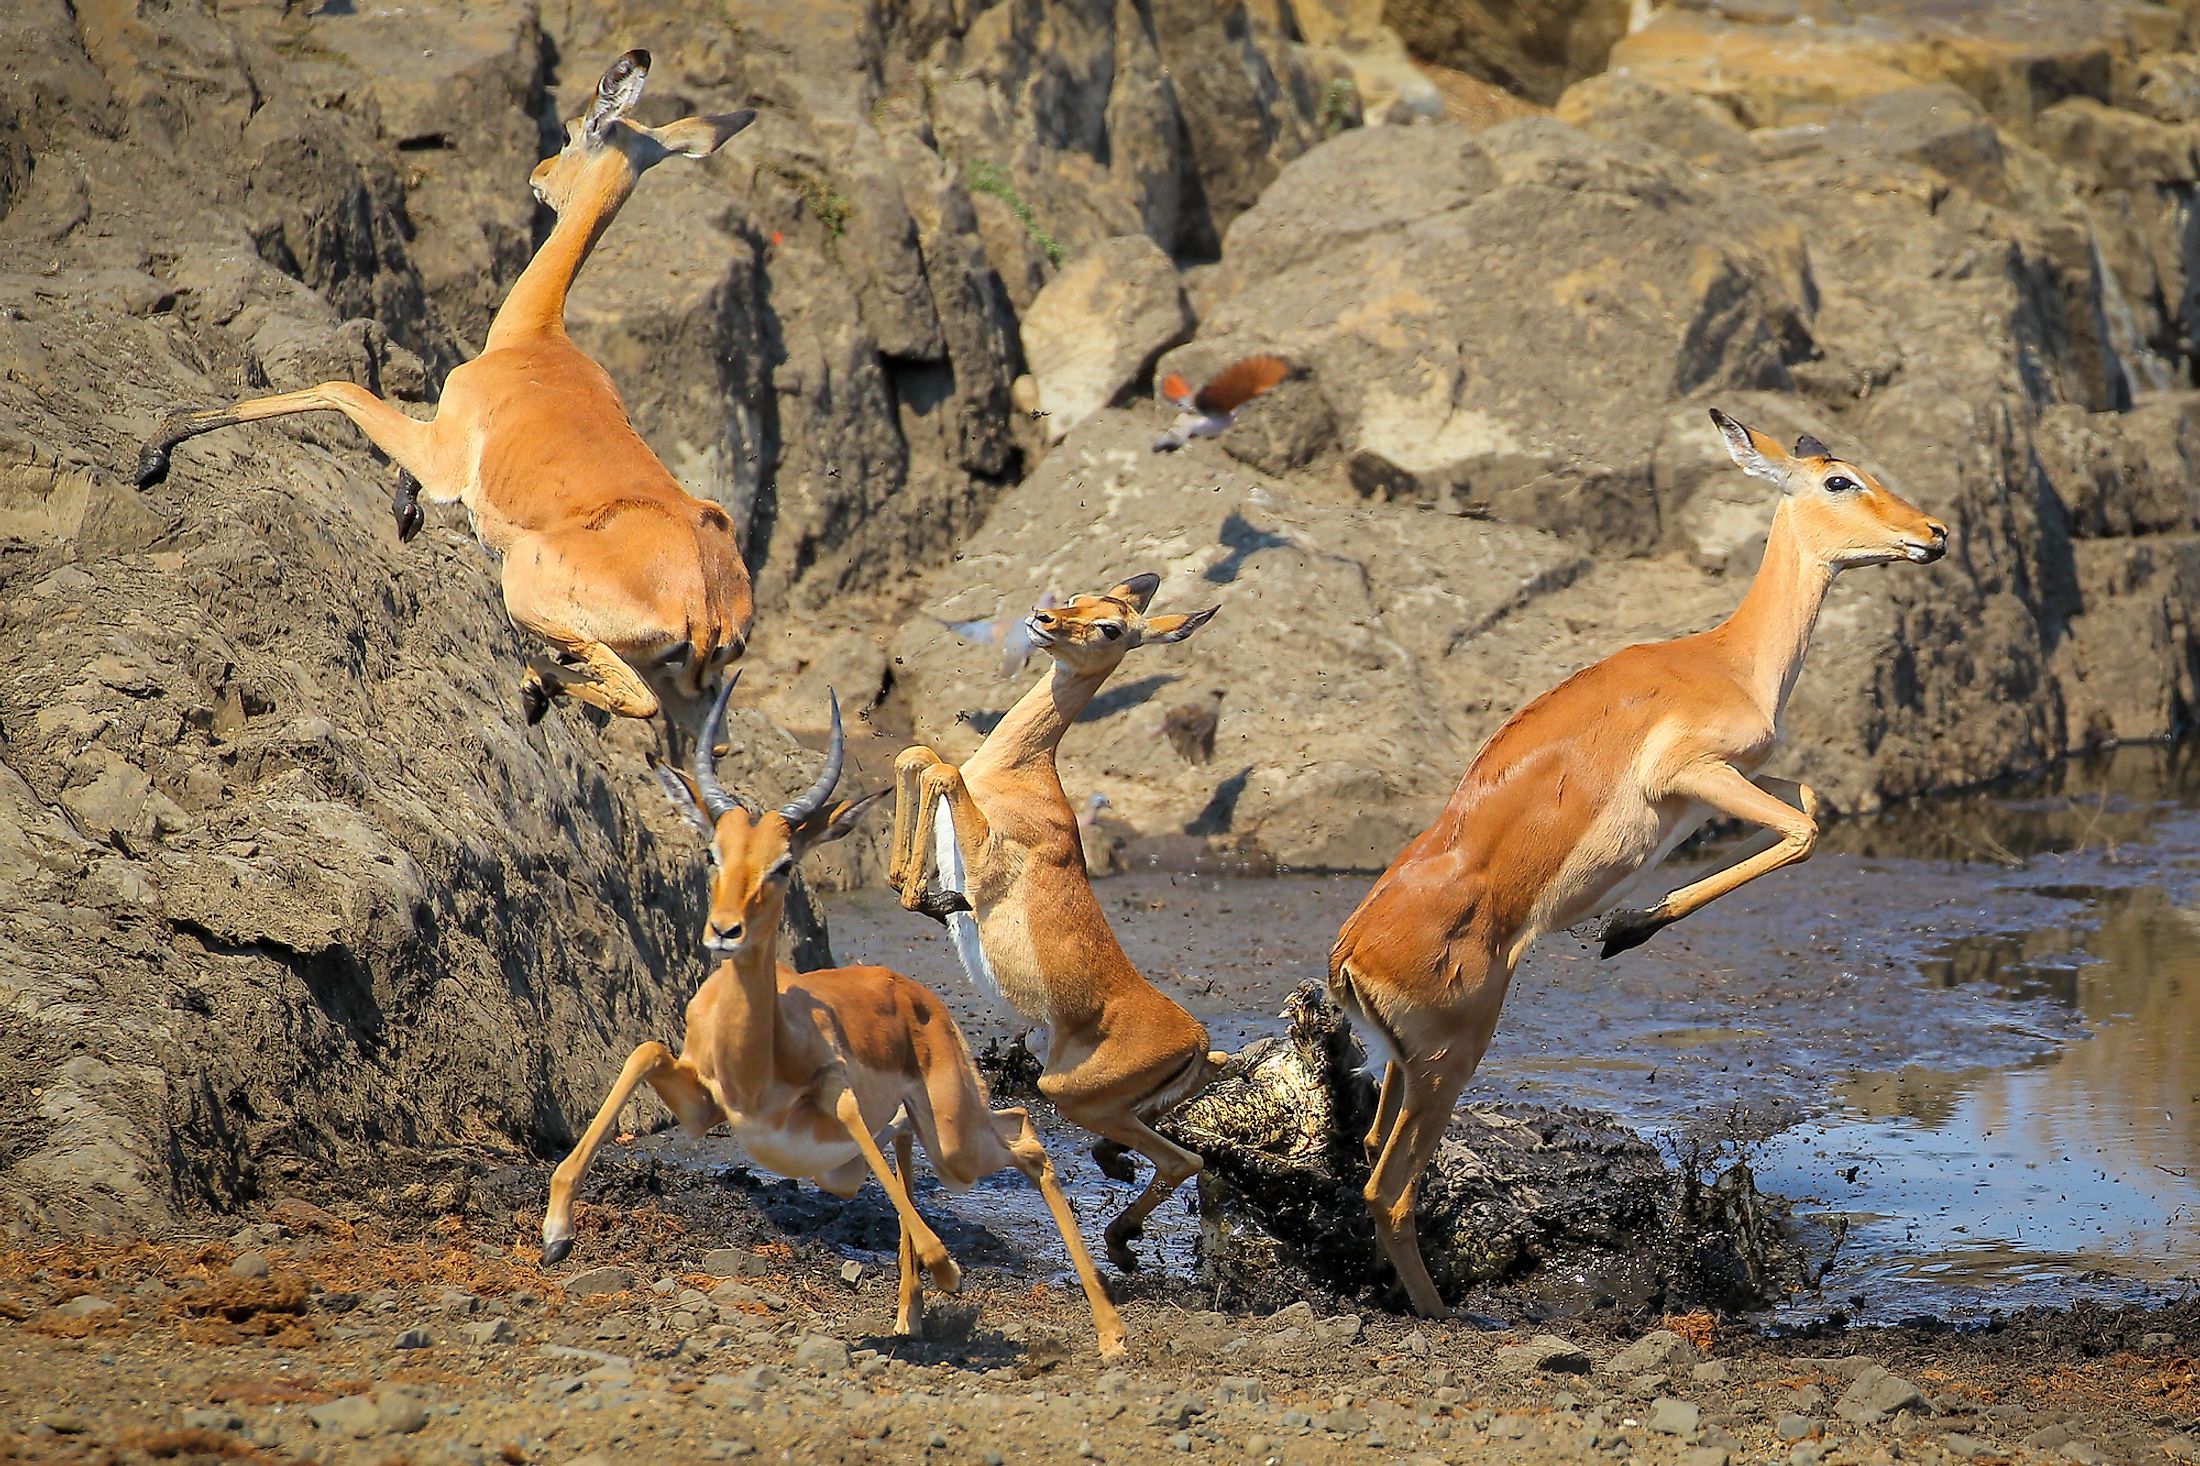 Predator-prey interaction in Kruger National Park, South Africa